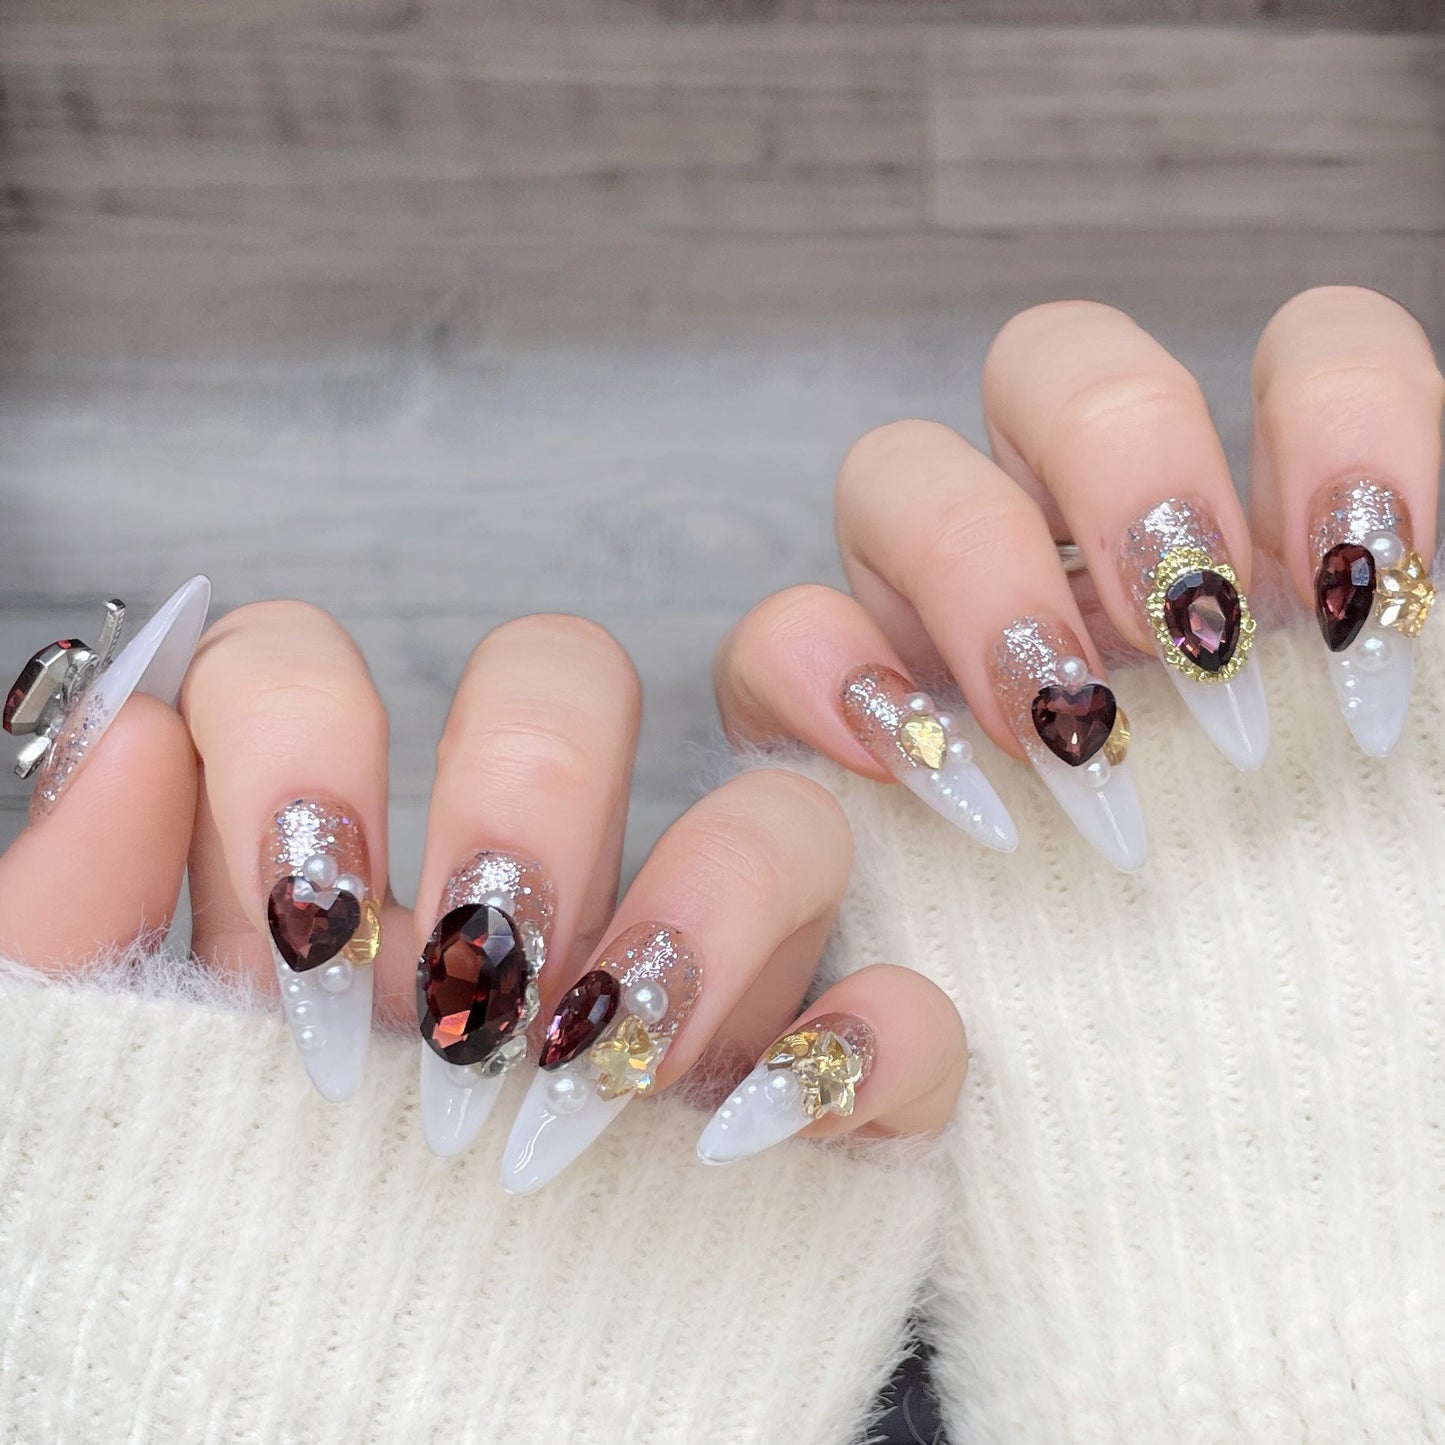 1404 Rhinestone style press on nails 100% handmade false nails golden white fake nails